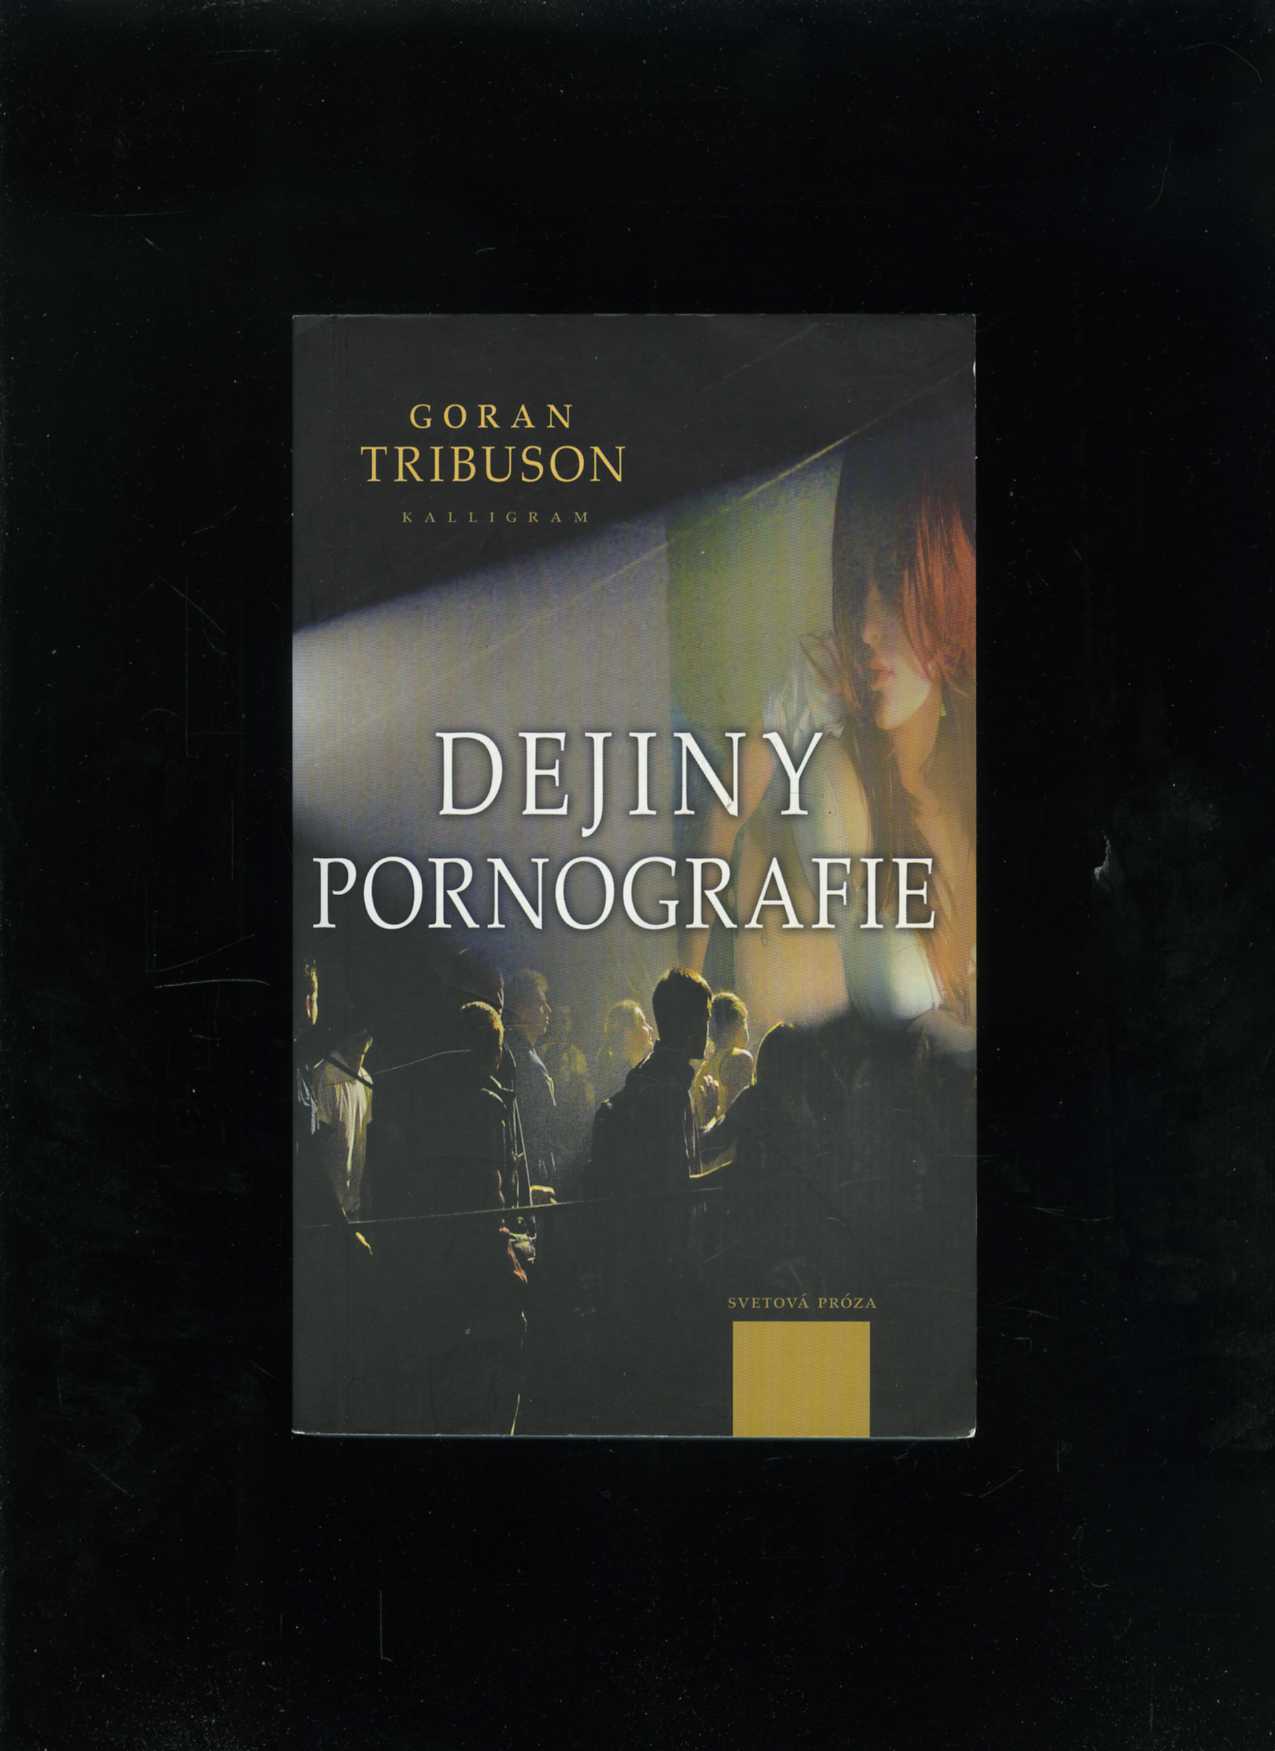 Dejiny pornografie (Goran Tribuson)